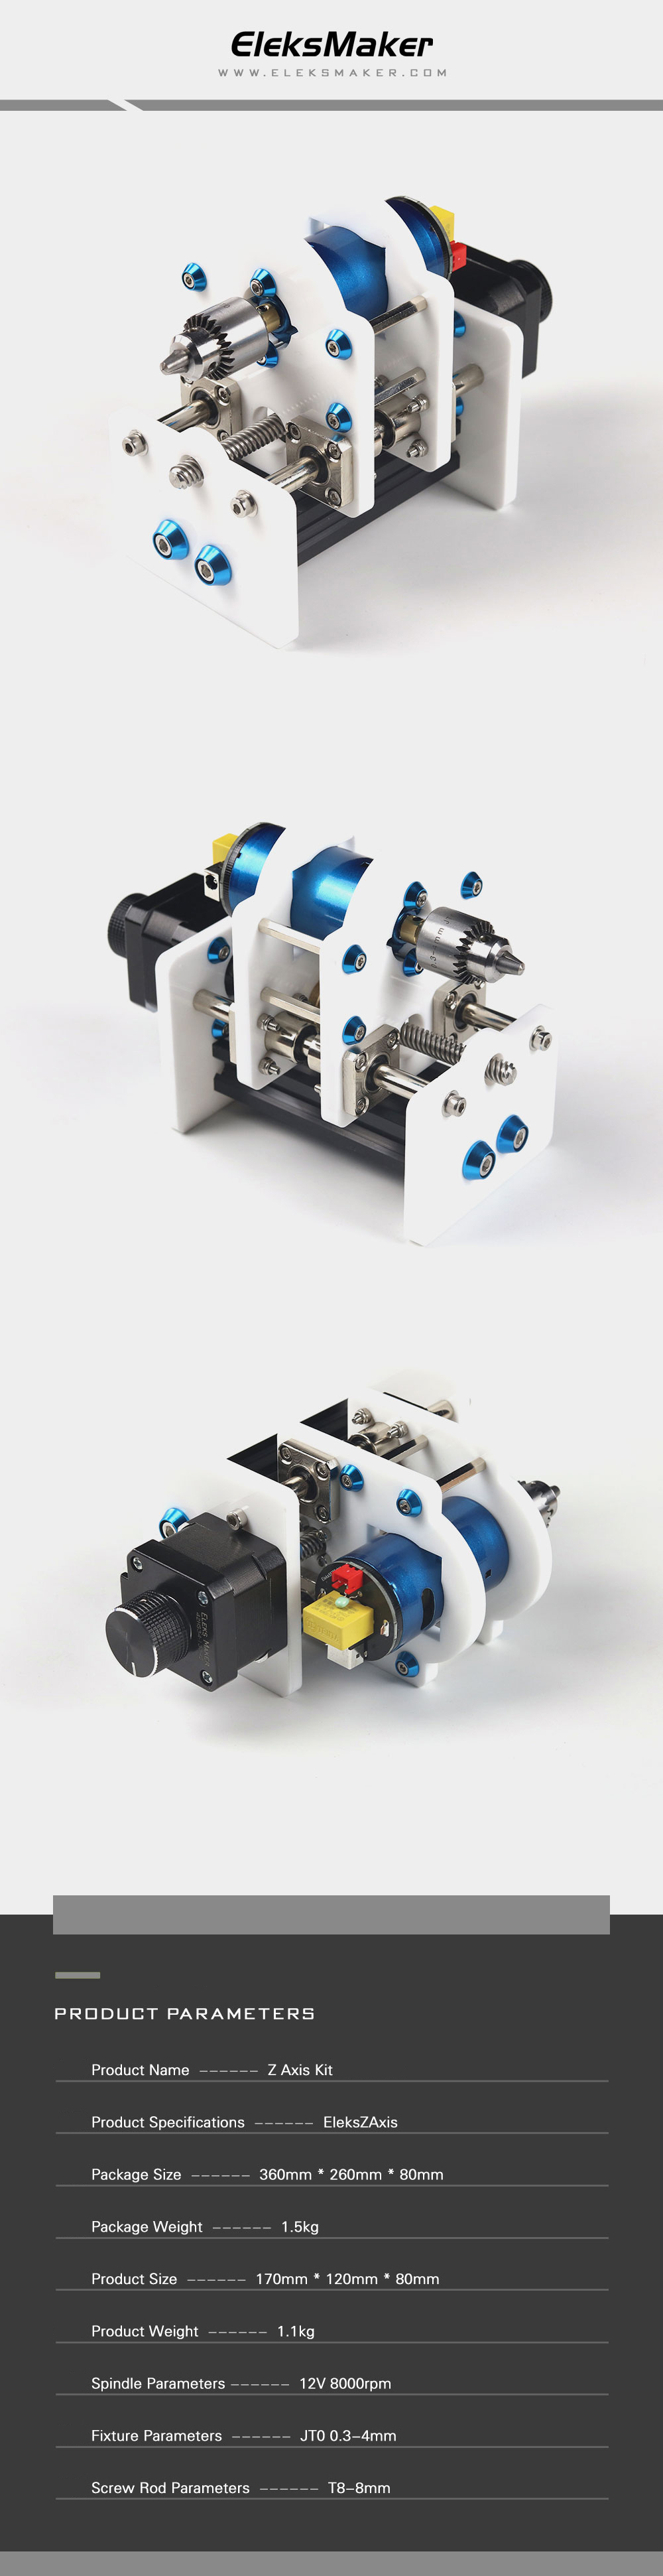 EleksMaker® EleksZAxis Z Axis & Spindle Motor Drill Chunk Integrated Set DIY Upgrade Kit for Laser Engraver CNC Router 10